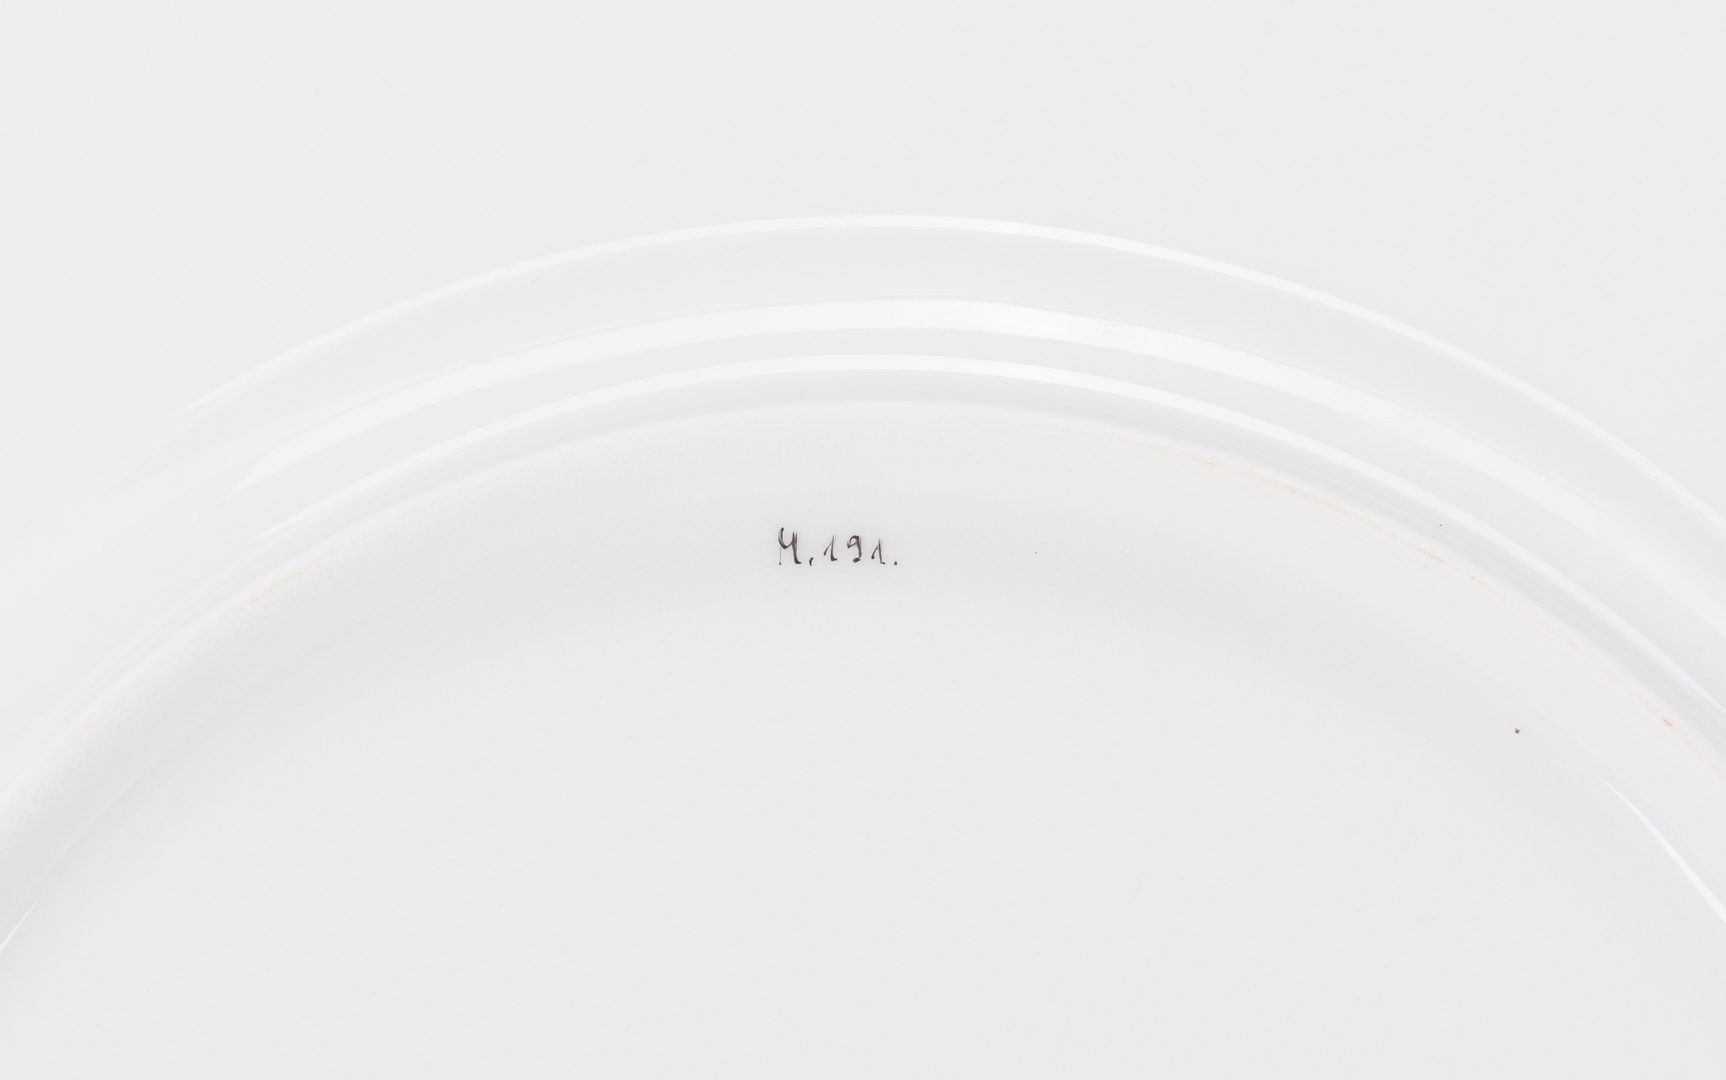 Lot 258: 8 Anna Weatherley Porcelain Dinner Plates